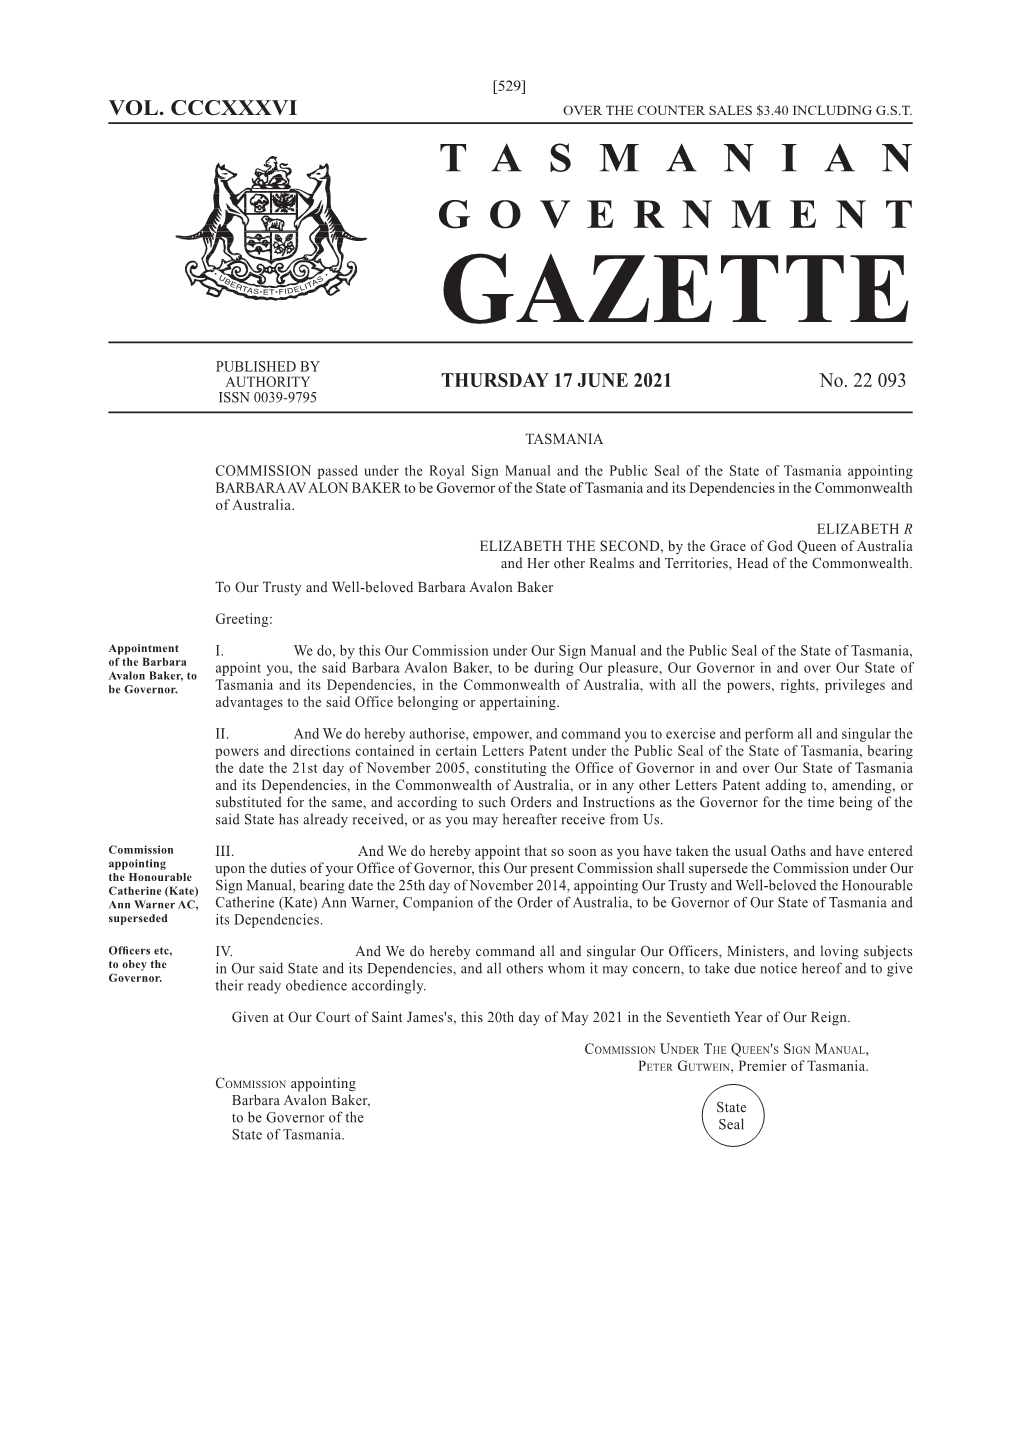 Government Gazette Tasmanian